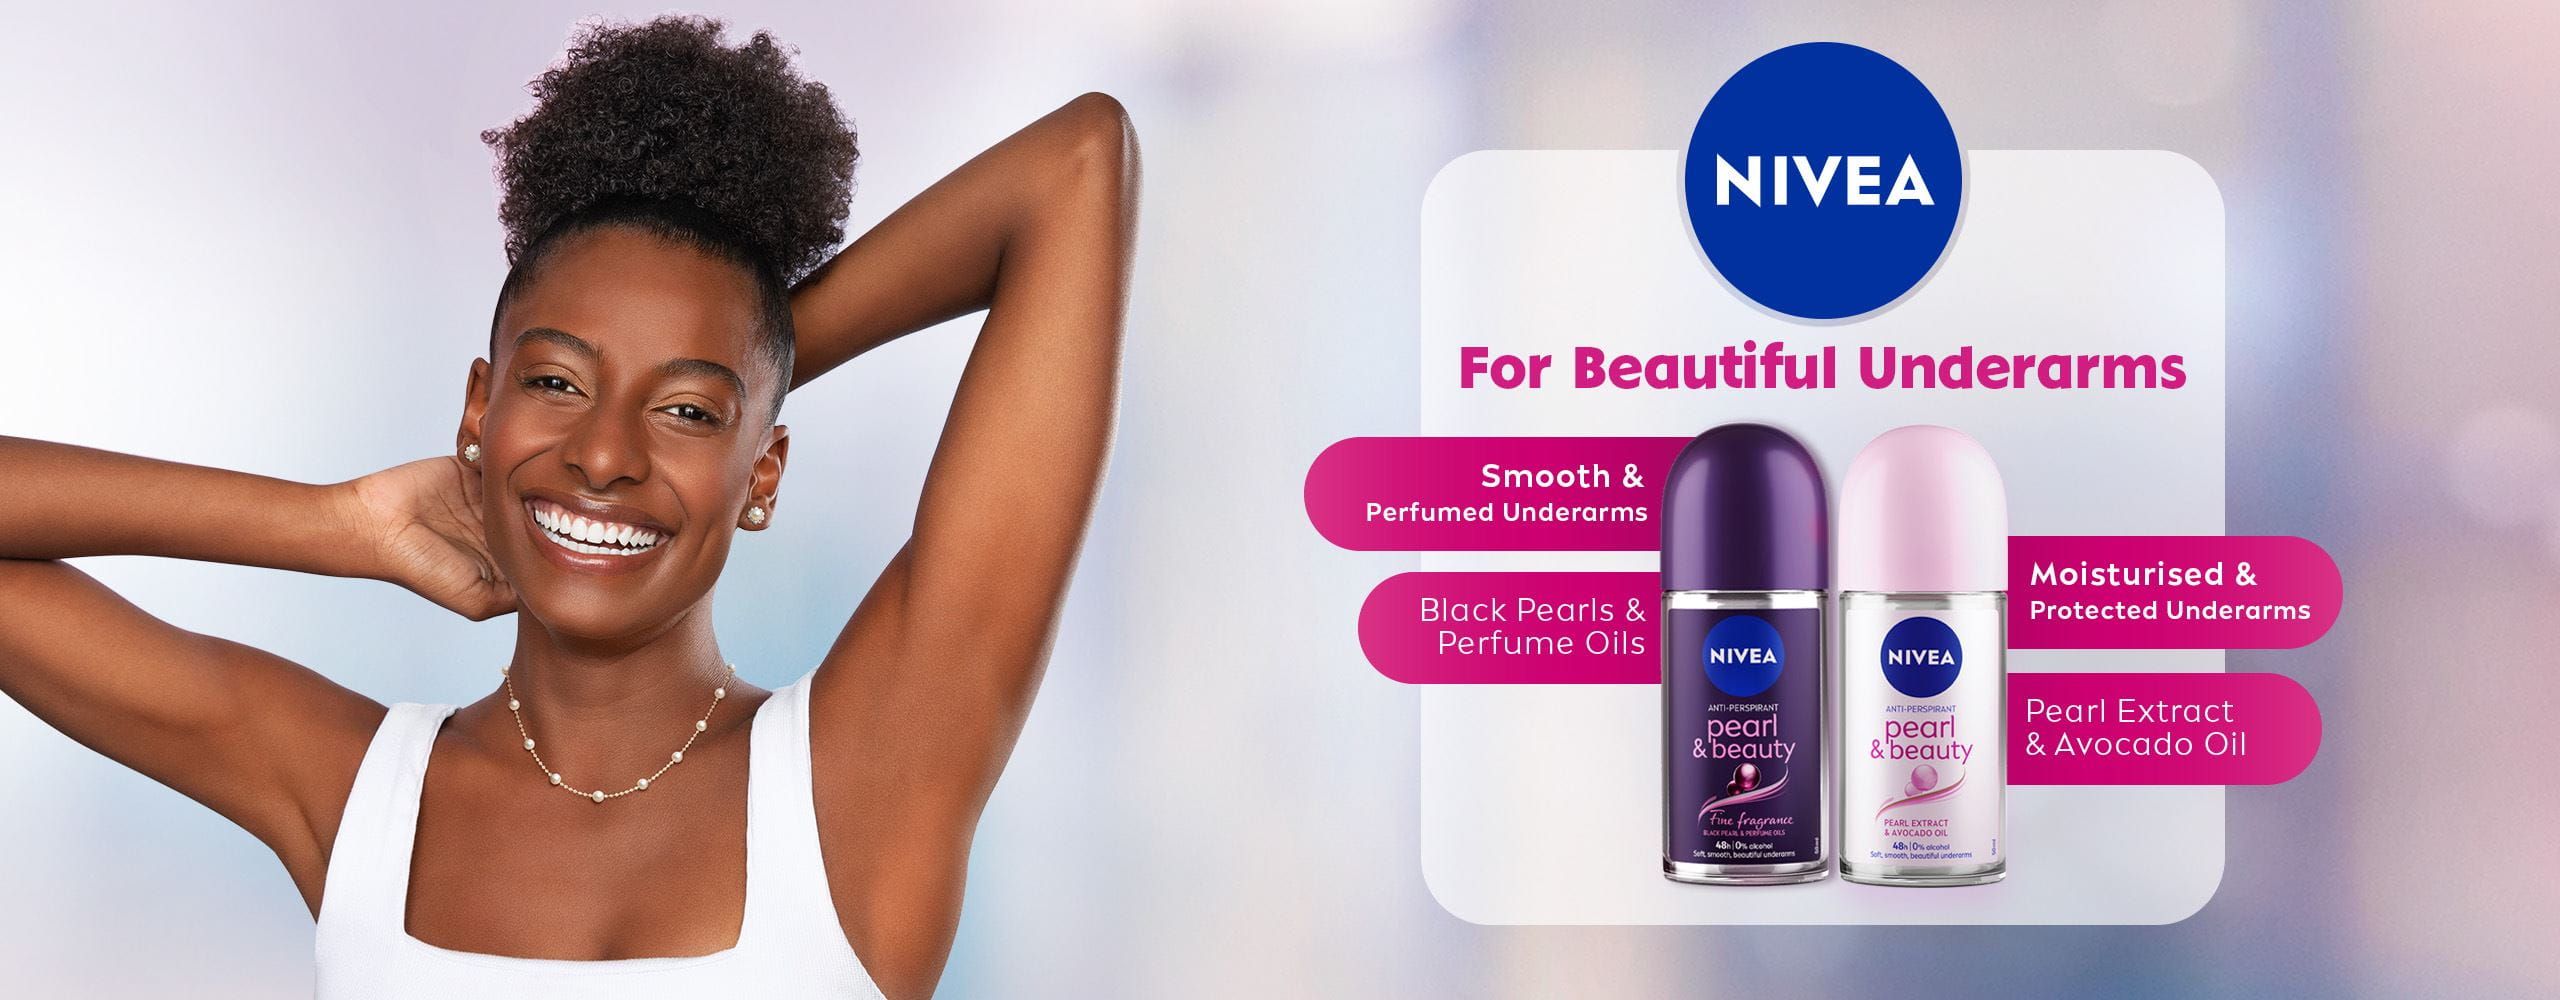 NIVEA Pearl & Beauty Deodorant Range